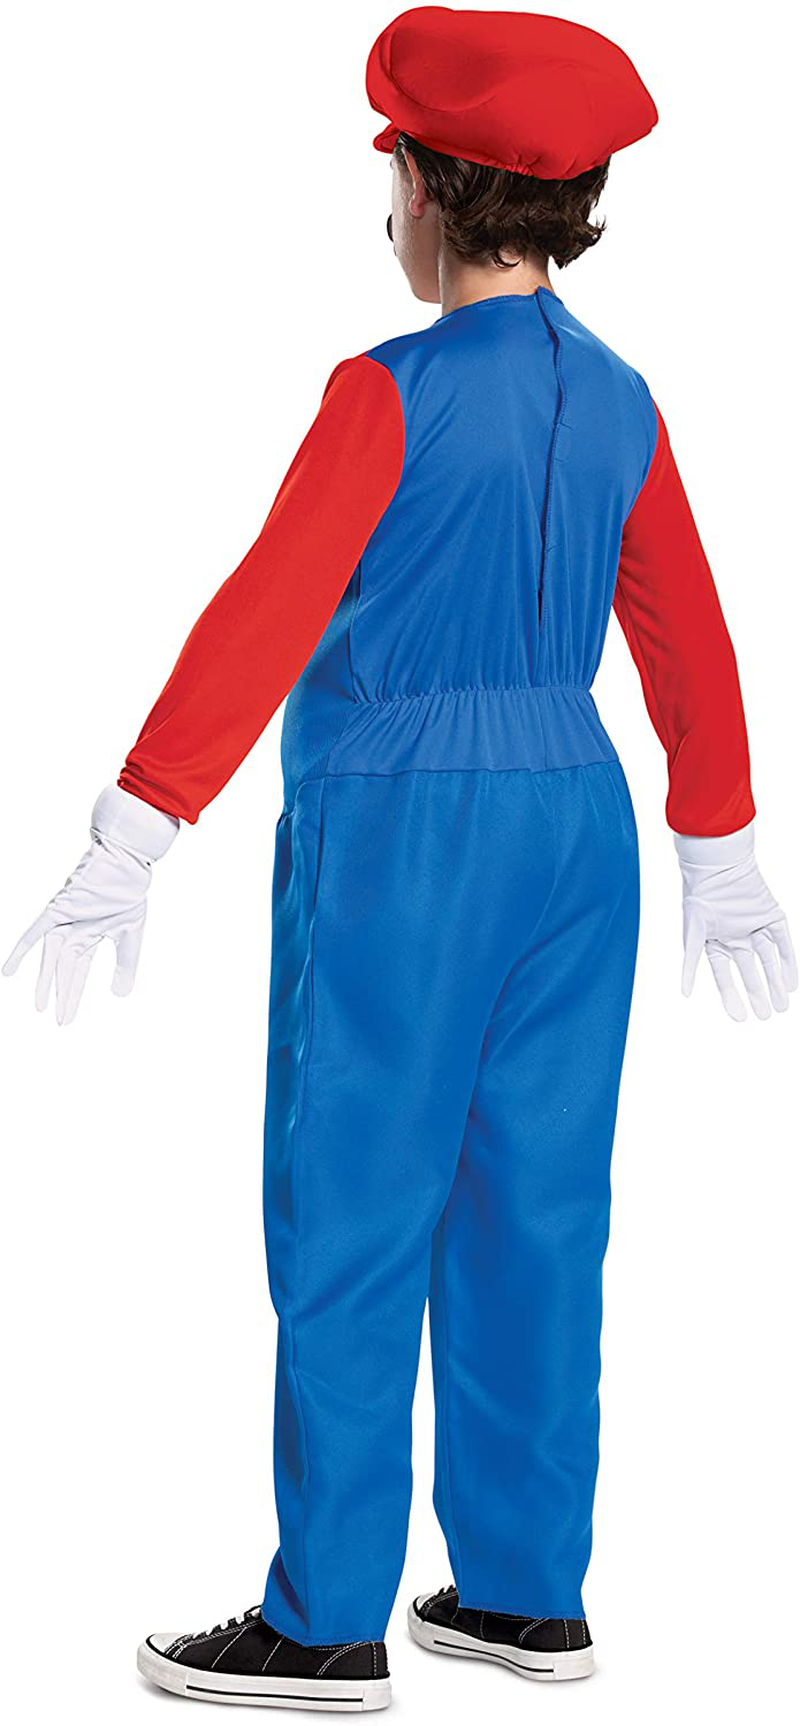 Disguise Nintendo Mario Deluxe Boys' Costume Red, M (7-8)